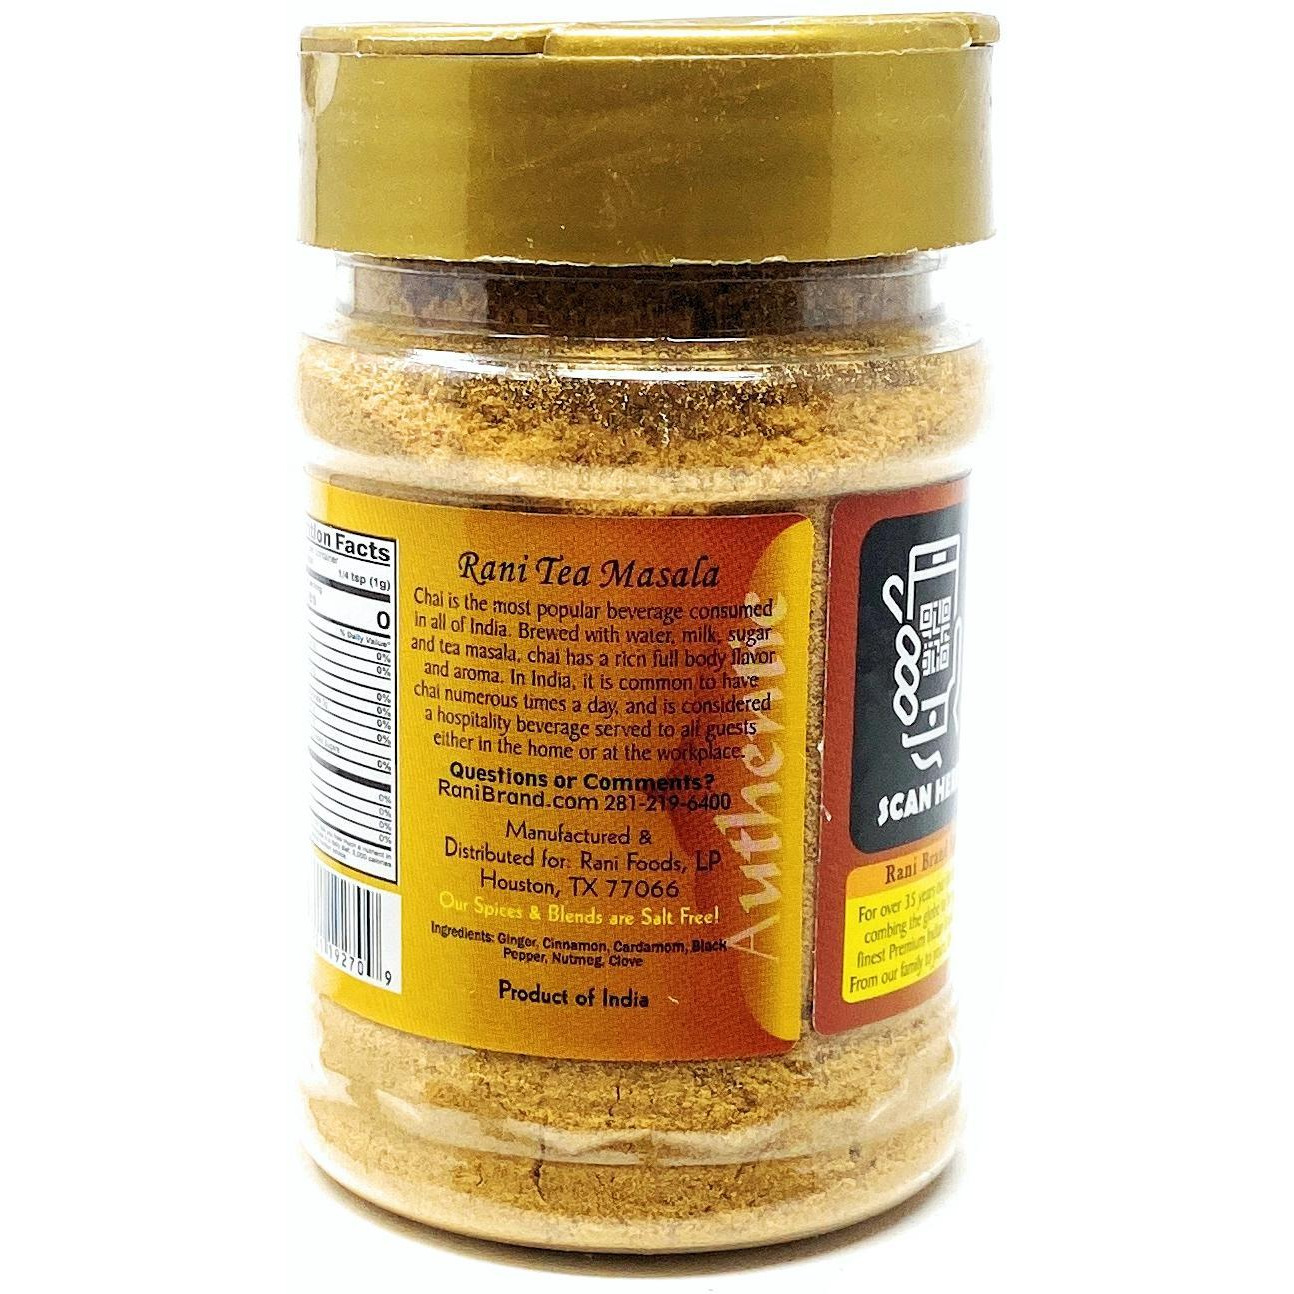 Rani Natural Tea (Chai) Masala Indian Spice Blend 3oz (85g) ~ All Natural | Vegan | Gluten Free Ingredients | Salt & Sugar Free | NON-GMO